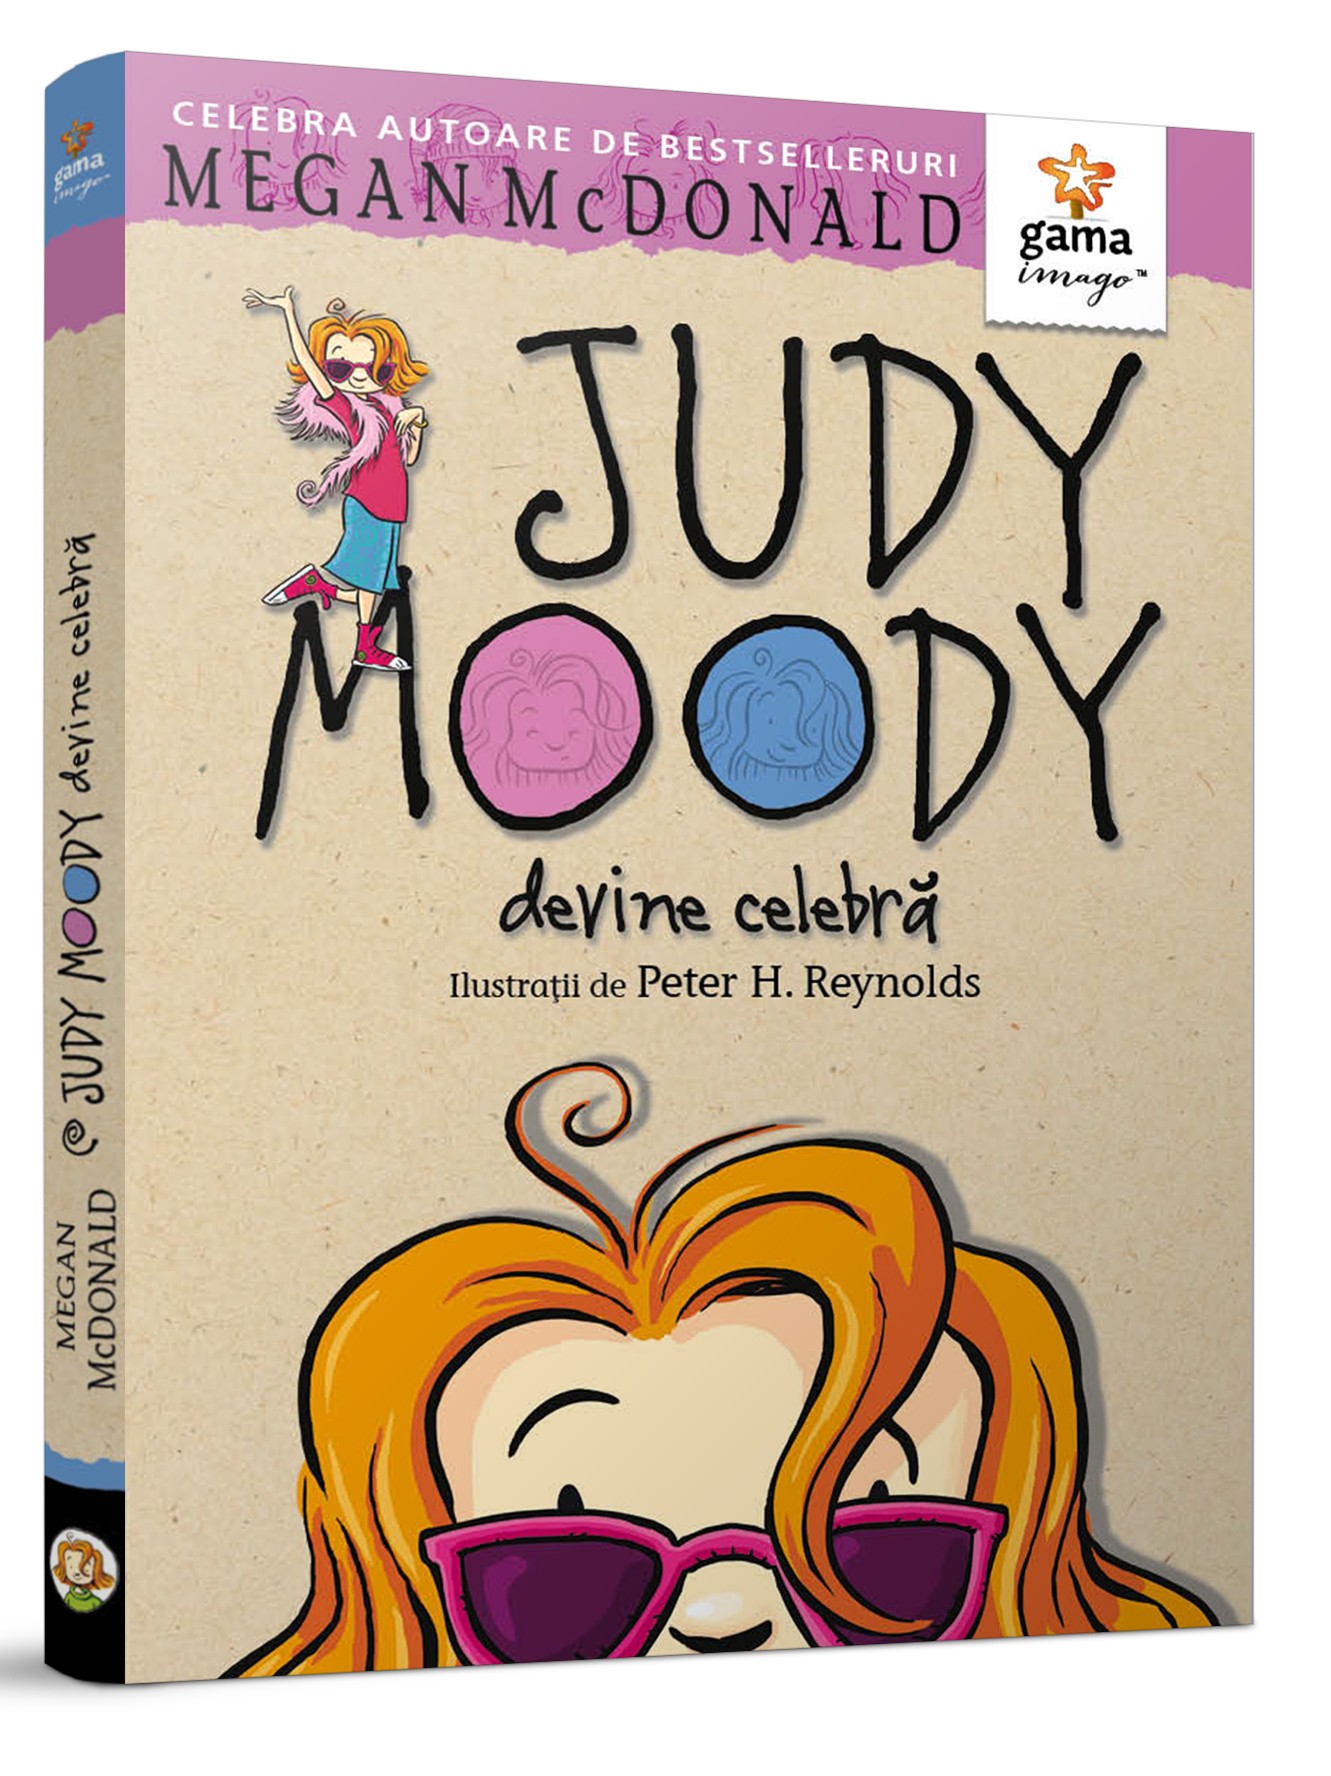 Judy Moody devine celebra | Megan McDonald